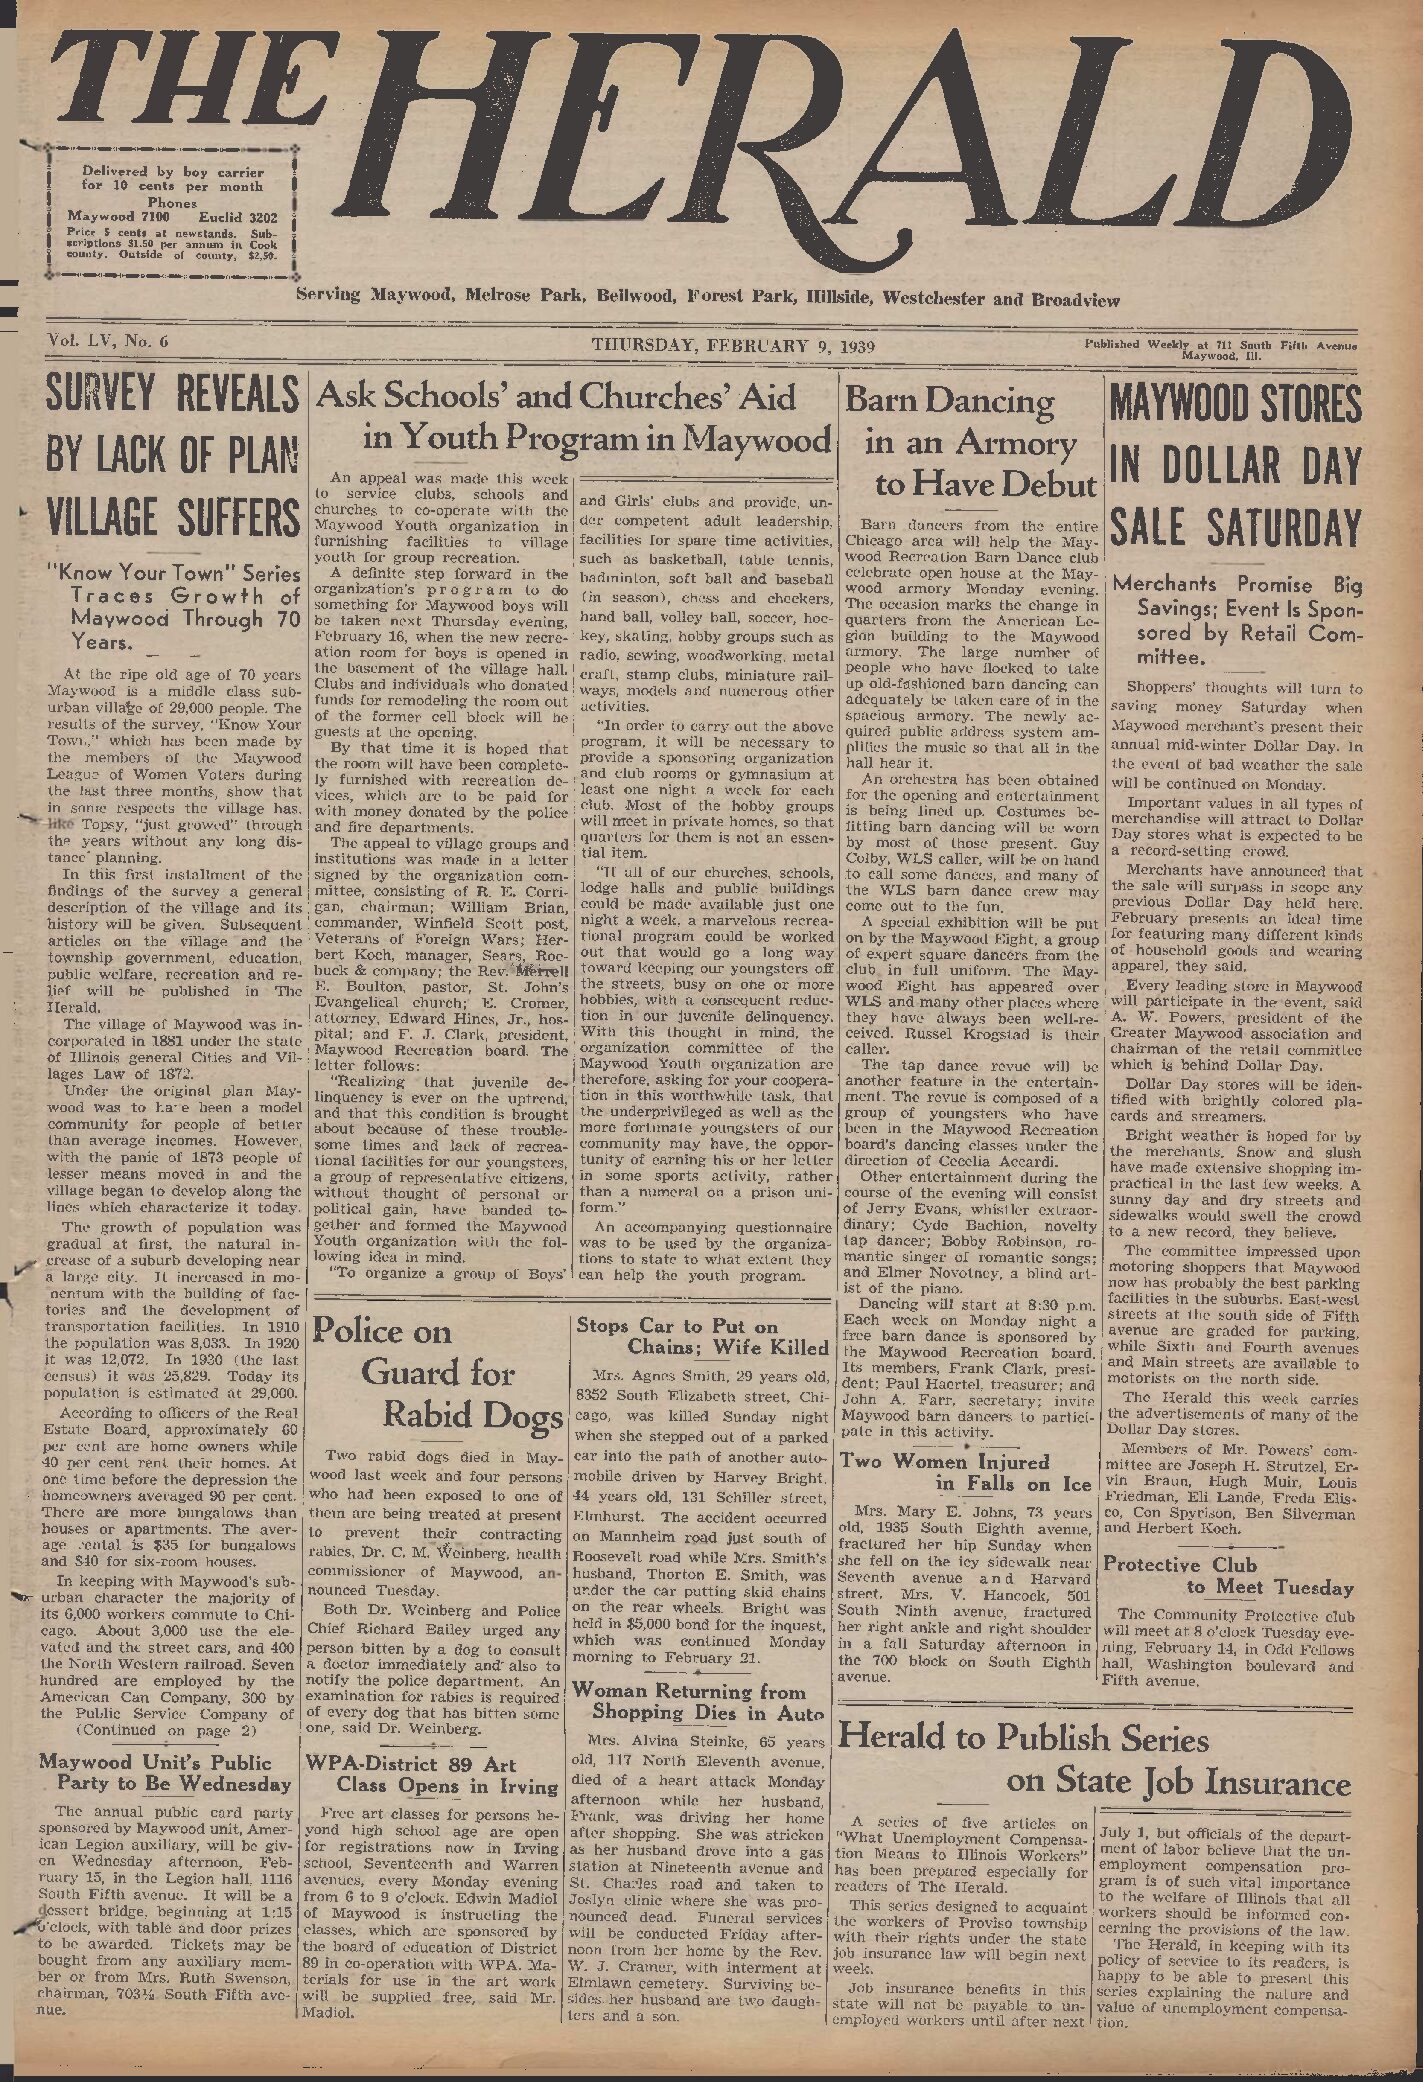 The Herald – 19390209